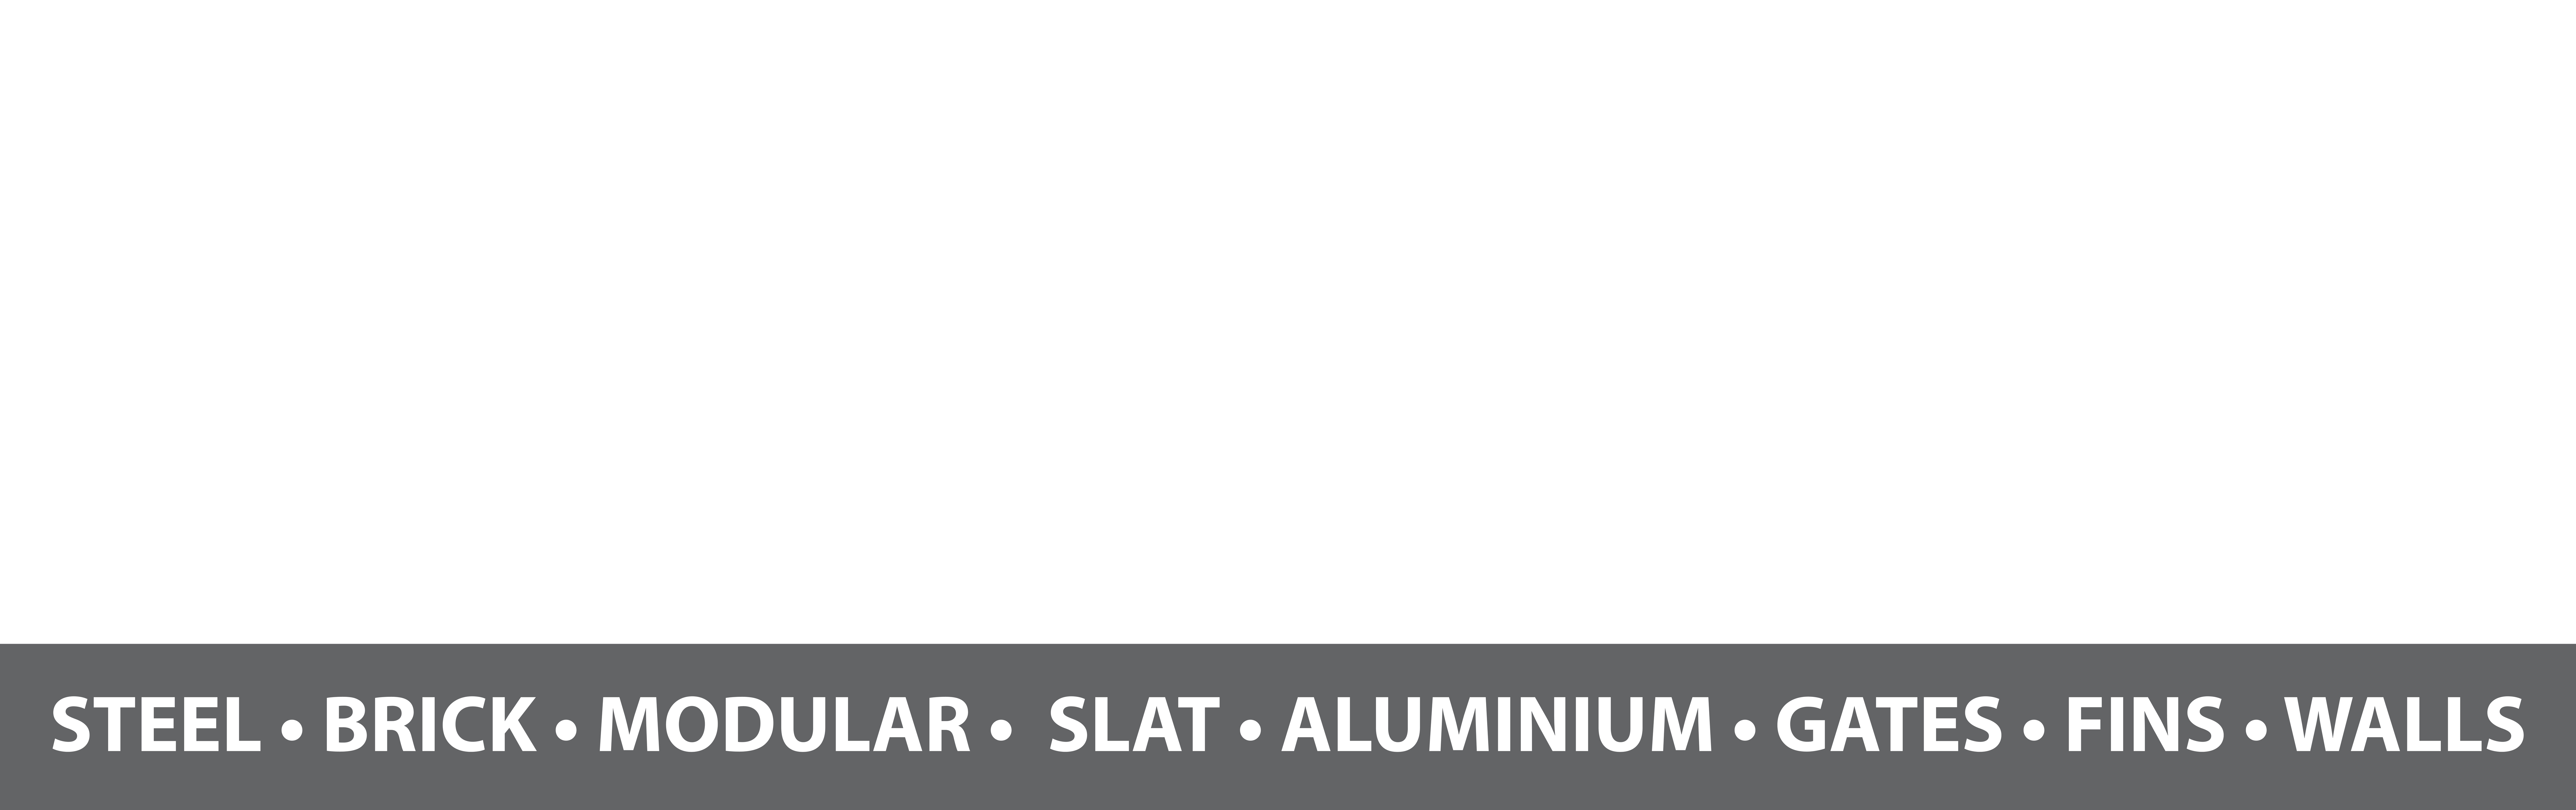 Custom Built Fences specialising in Steel, brick, modular, slat, aluminium, gates, fins and walls